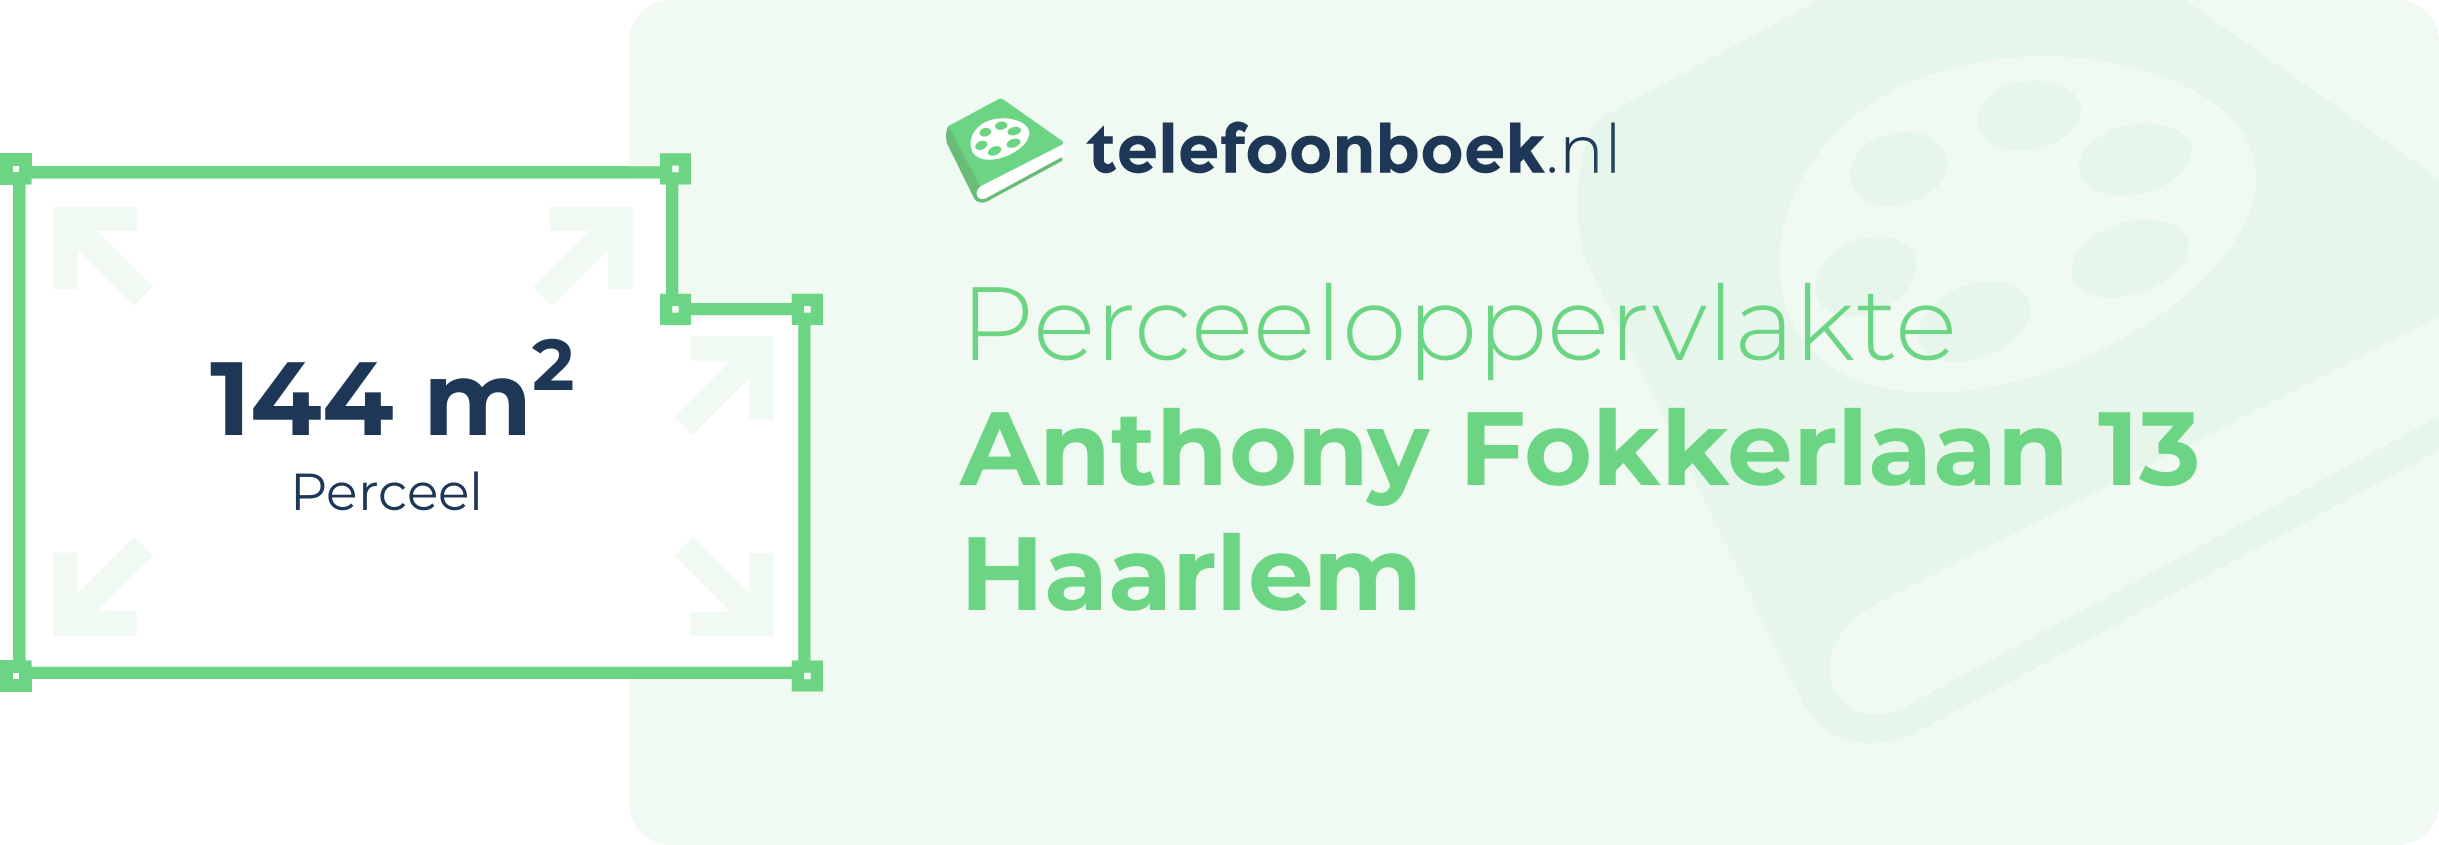 Perceeloppervlakte Anthony Fokkerlaan 13 Haarlem